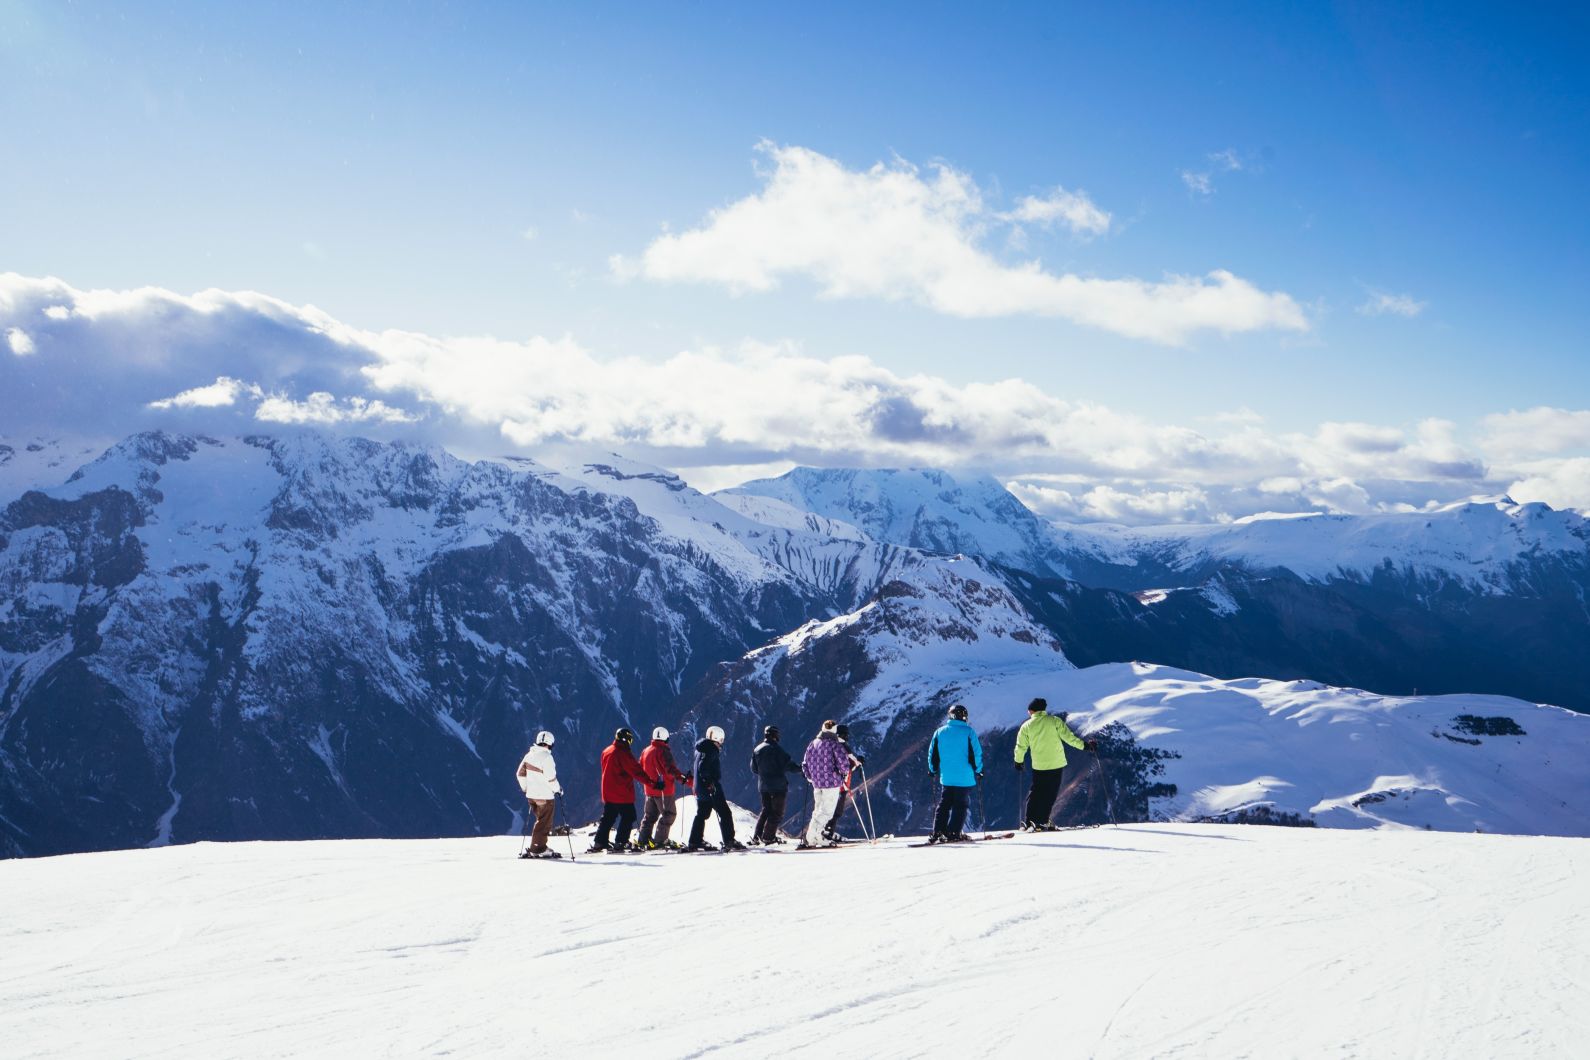 Chamonix skiers on the ridge